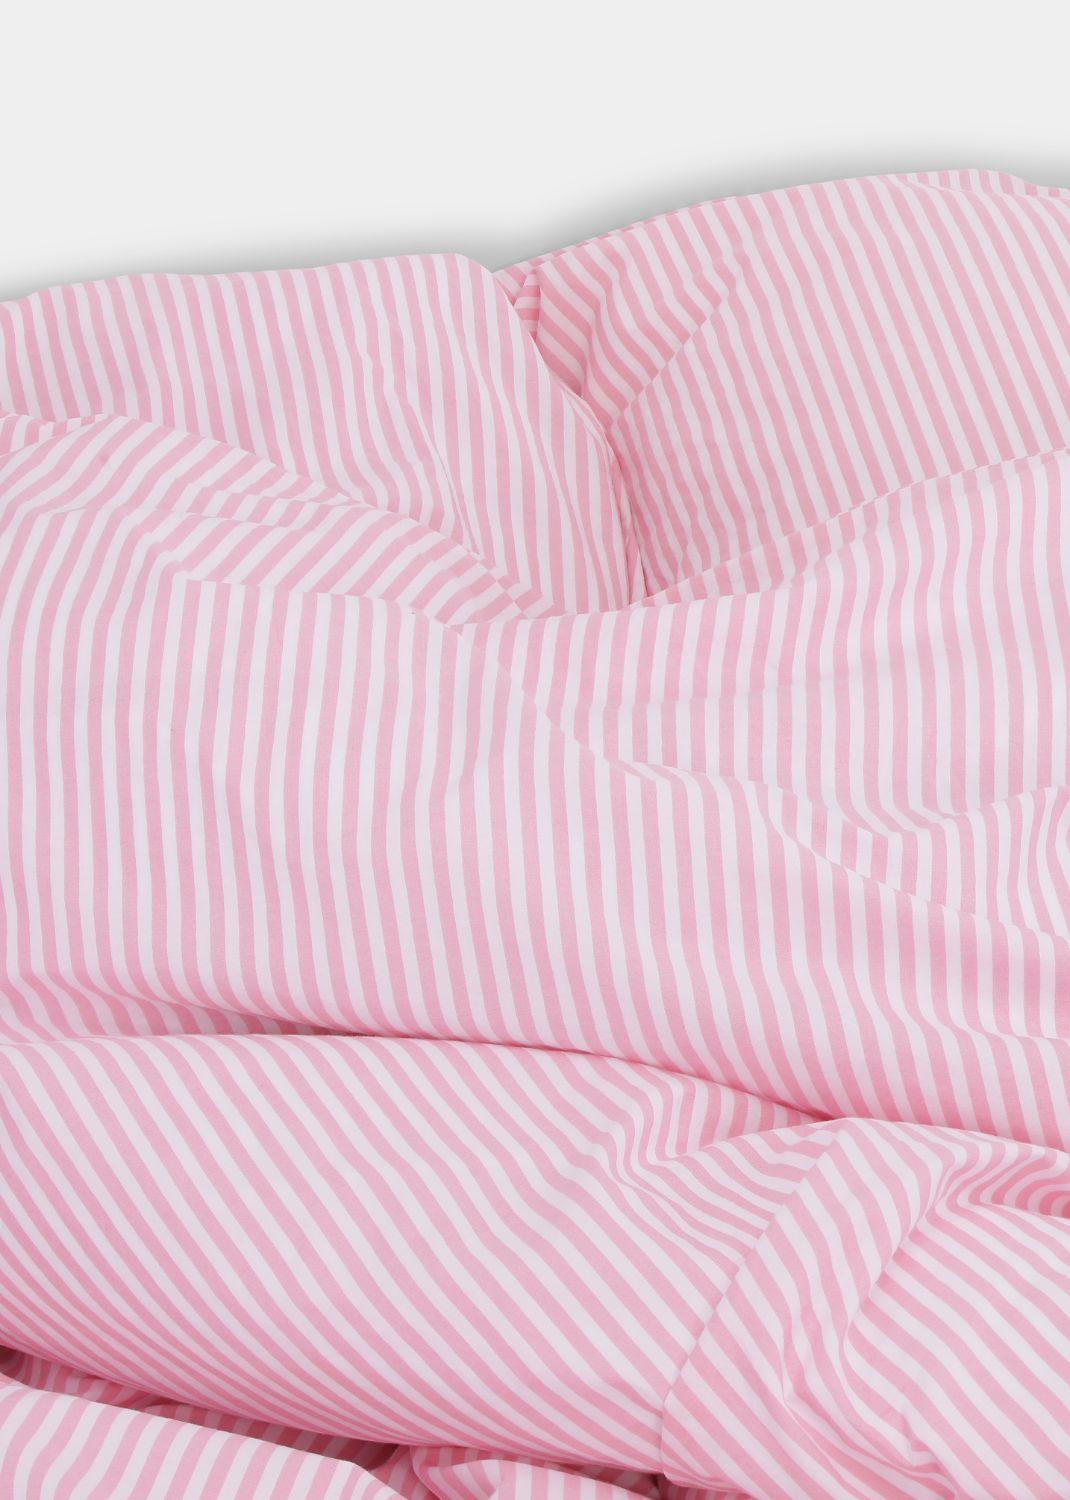 Sekan Studio Blank X SEKAN - BOMULL PERCALE BED SET - Pink Strib